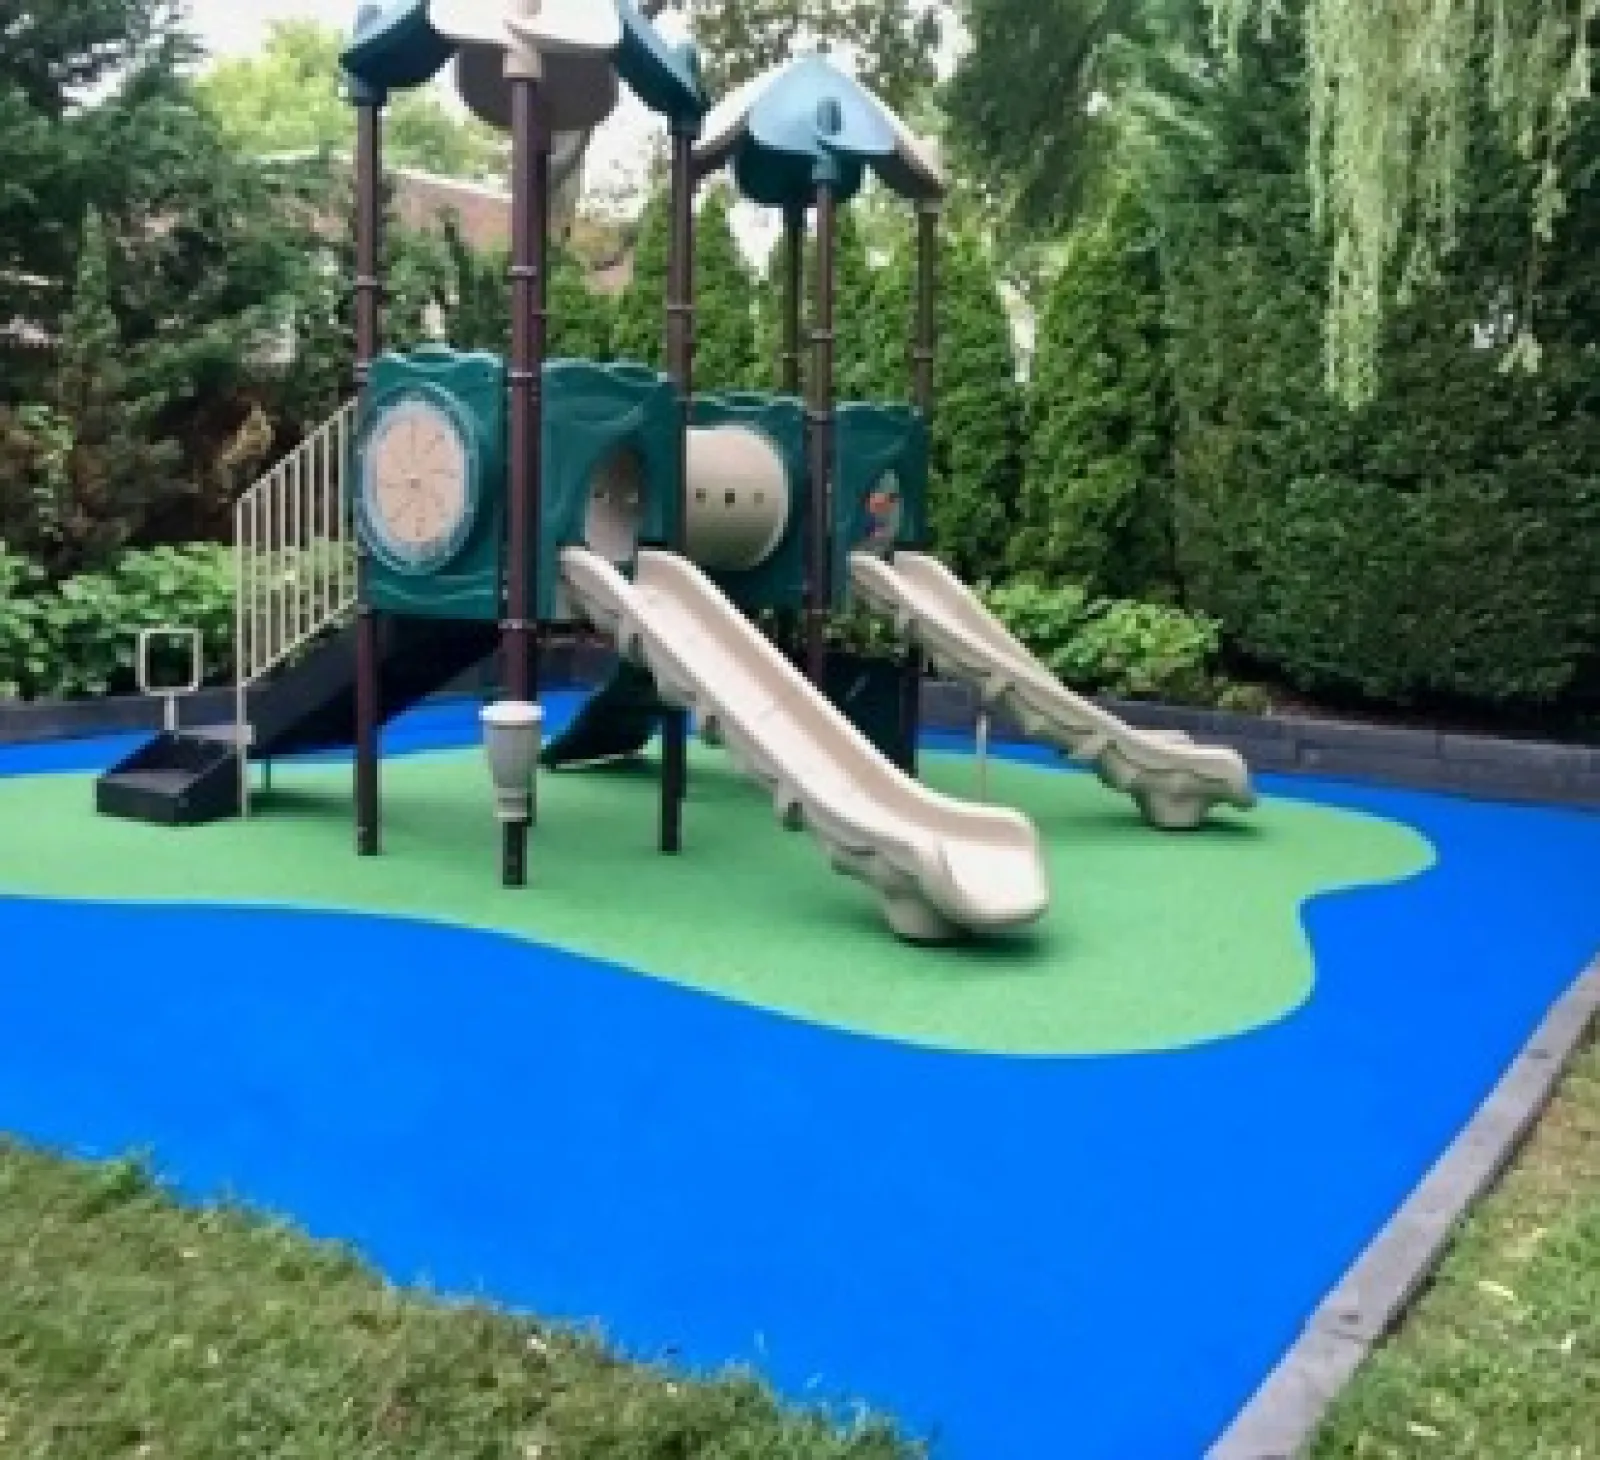 a small children's playground